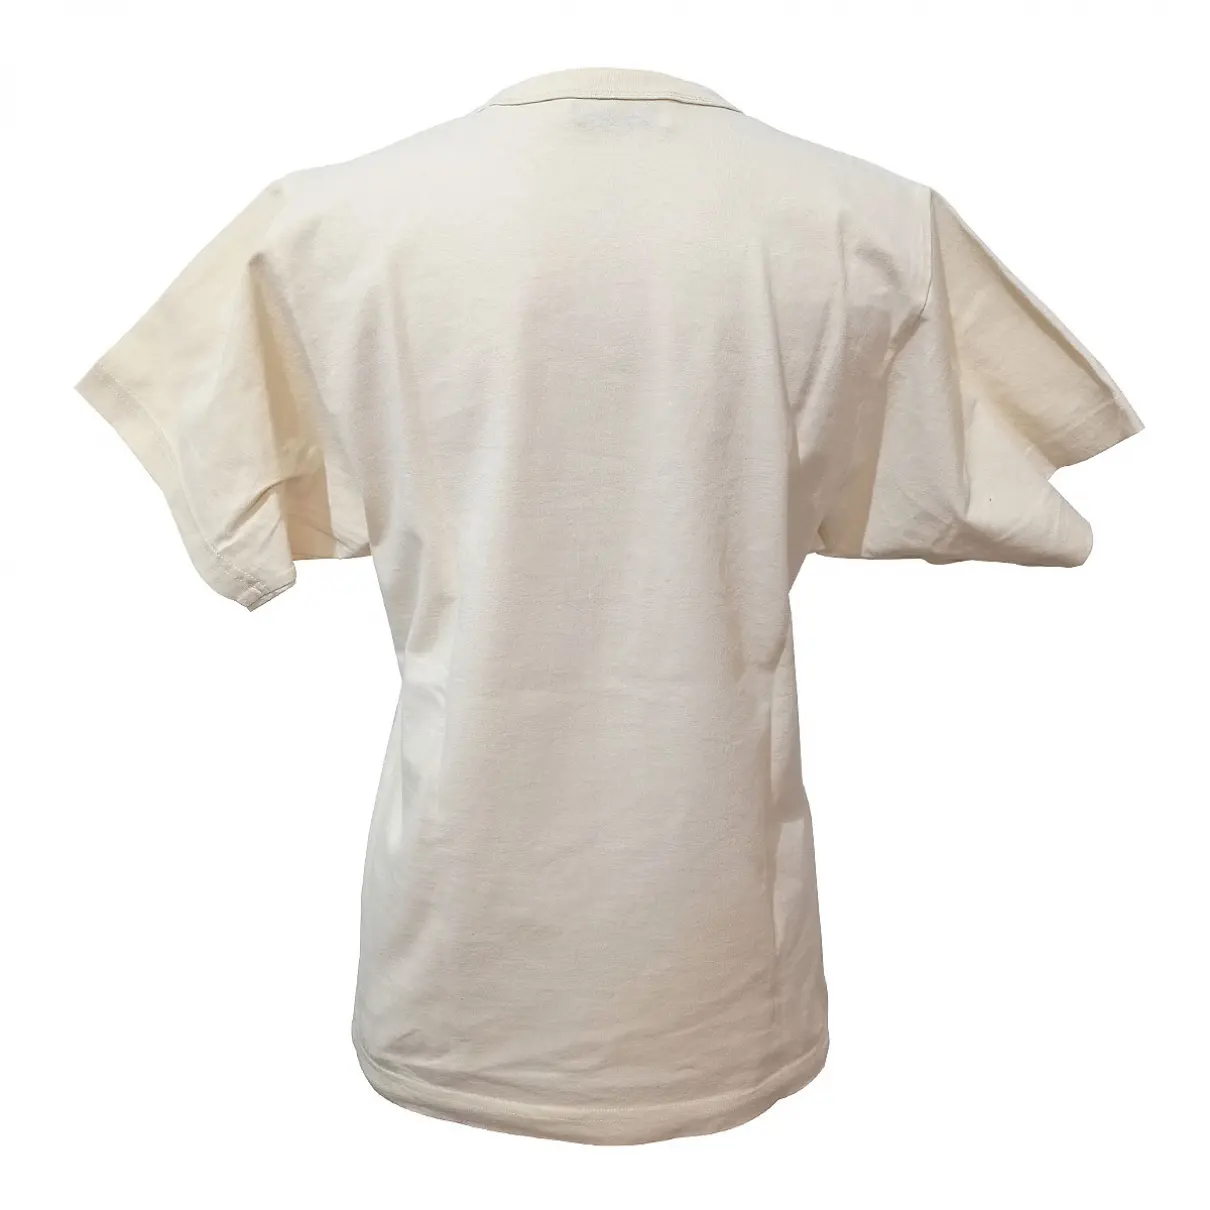 Buy Lanvin T-shirt online